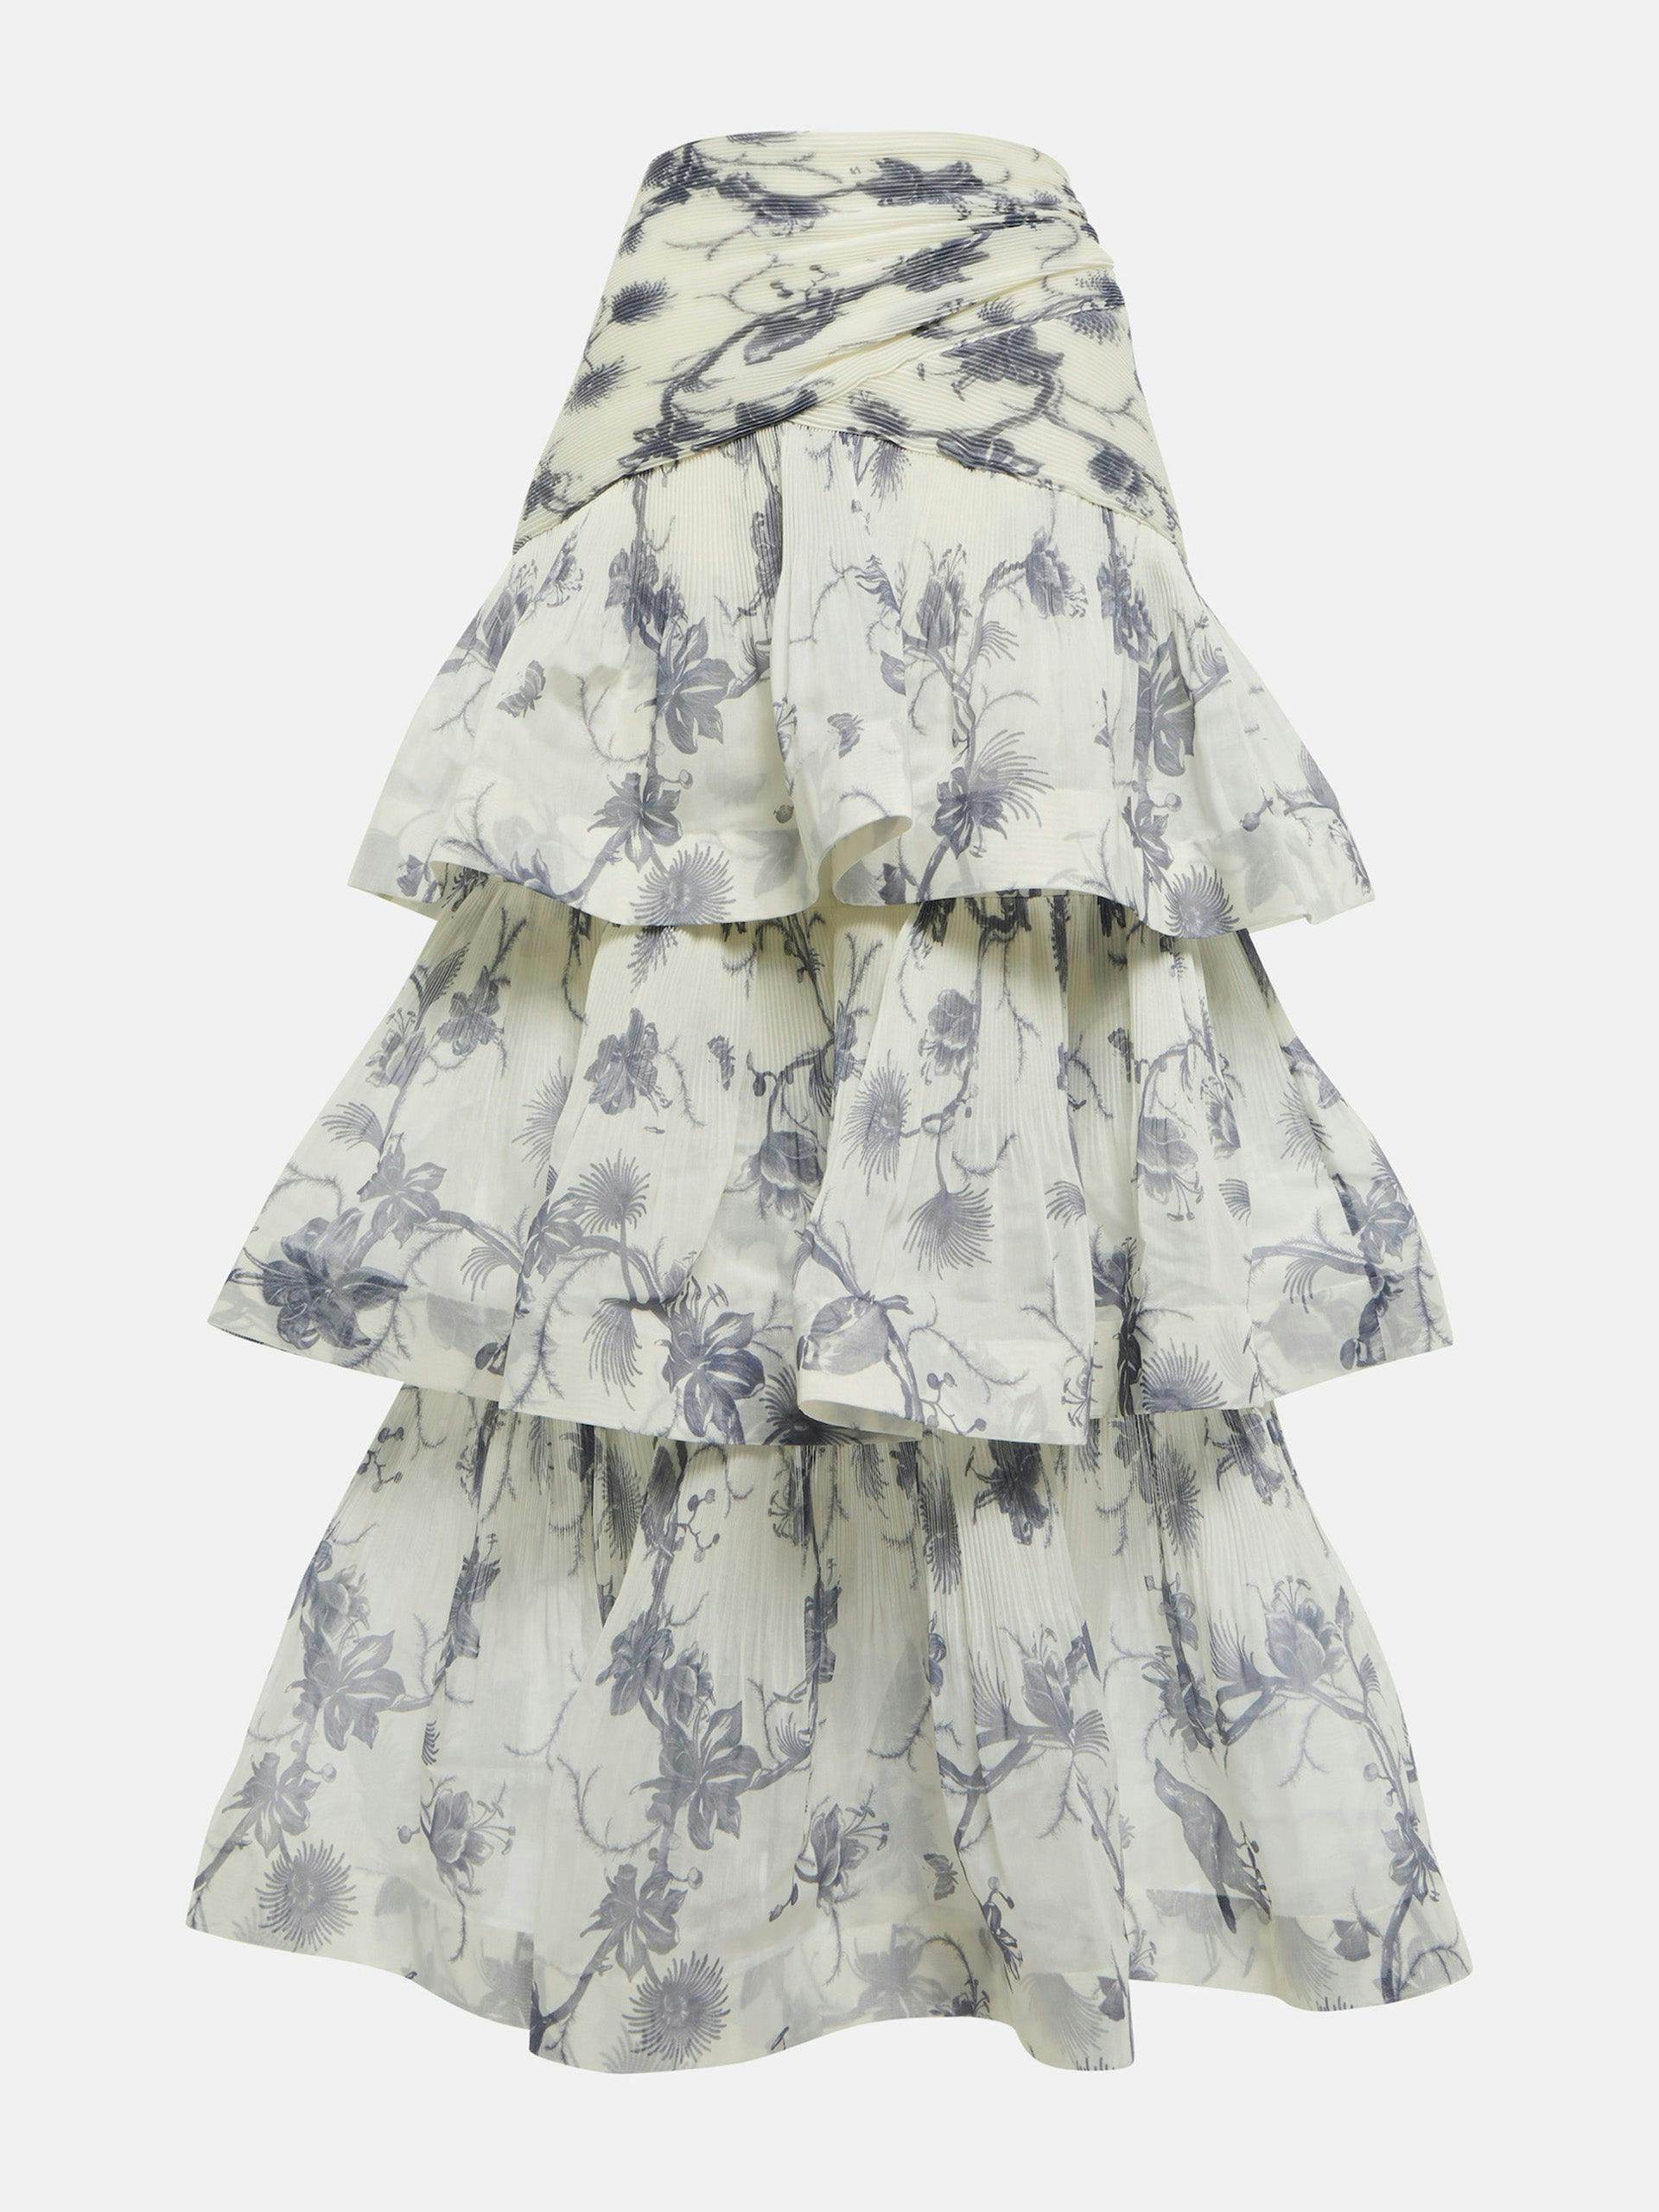 Floral print ruffled skirt